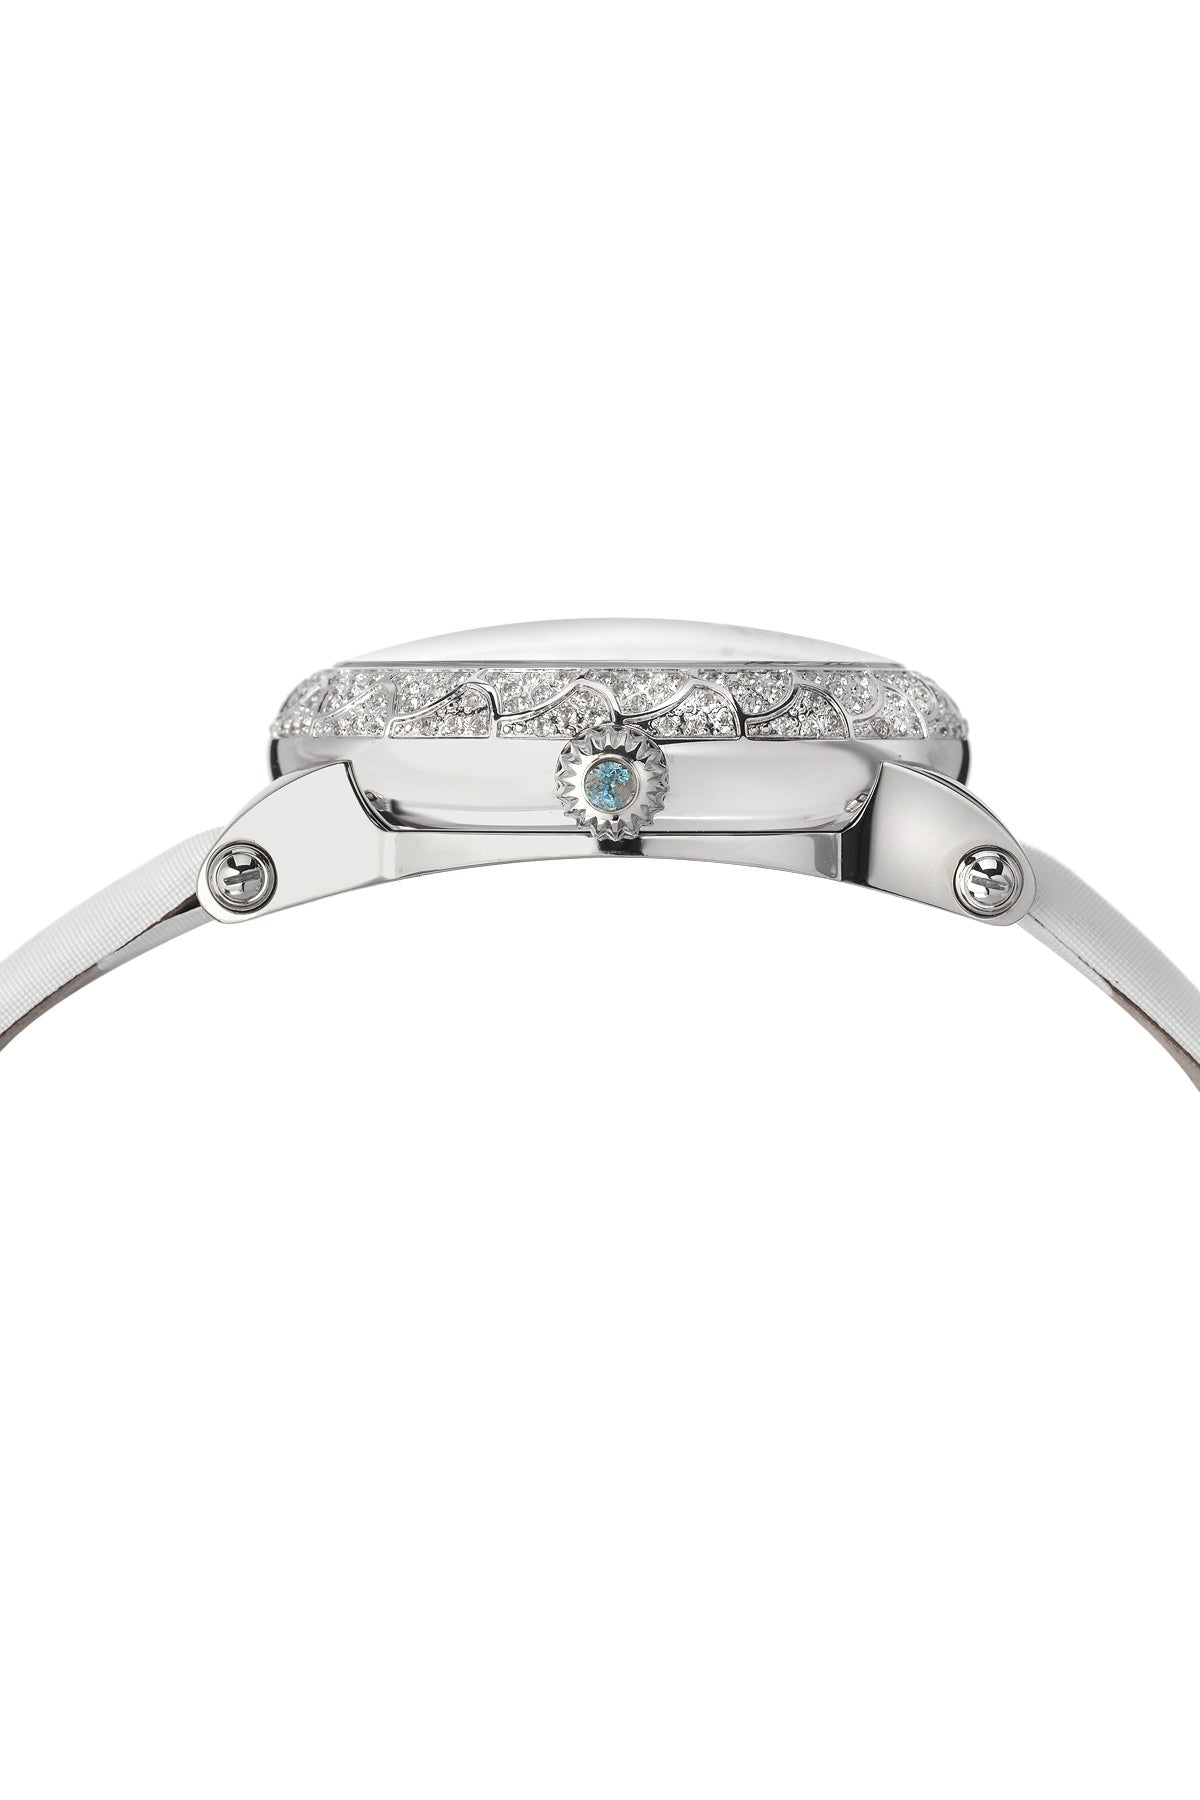 Porsamo Bleu Genevieve Luxury Topaz Women's Watch Satin Leather Watch, Silver, White 681AGEL